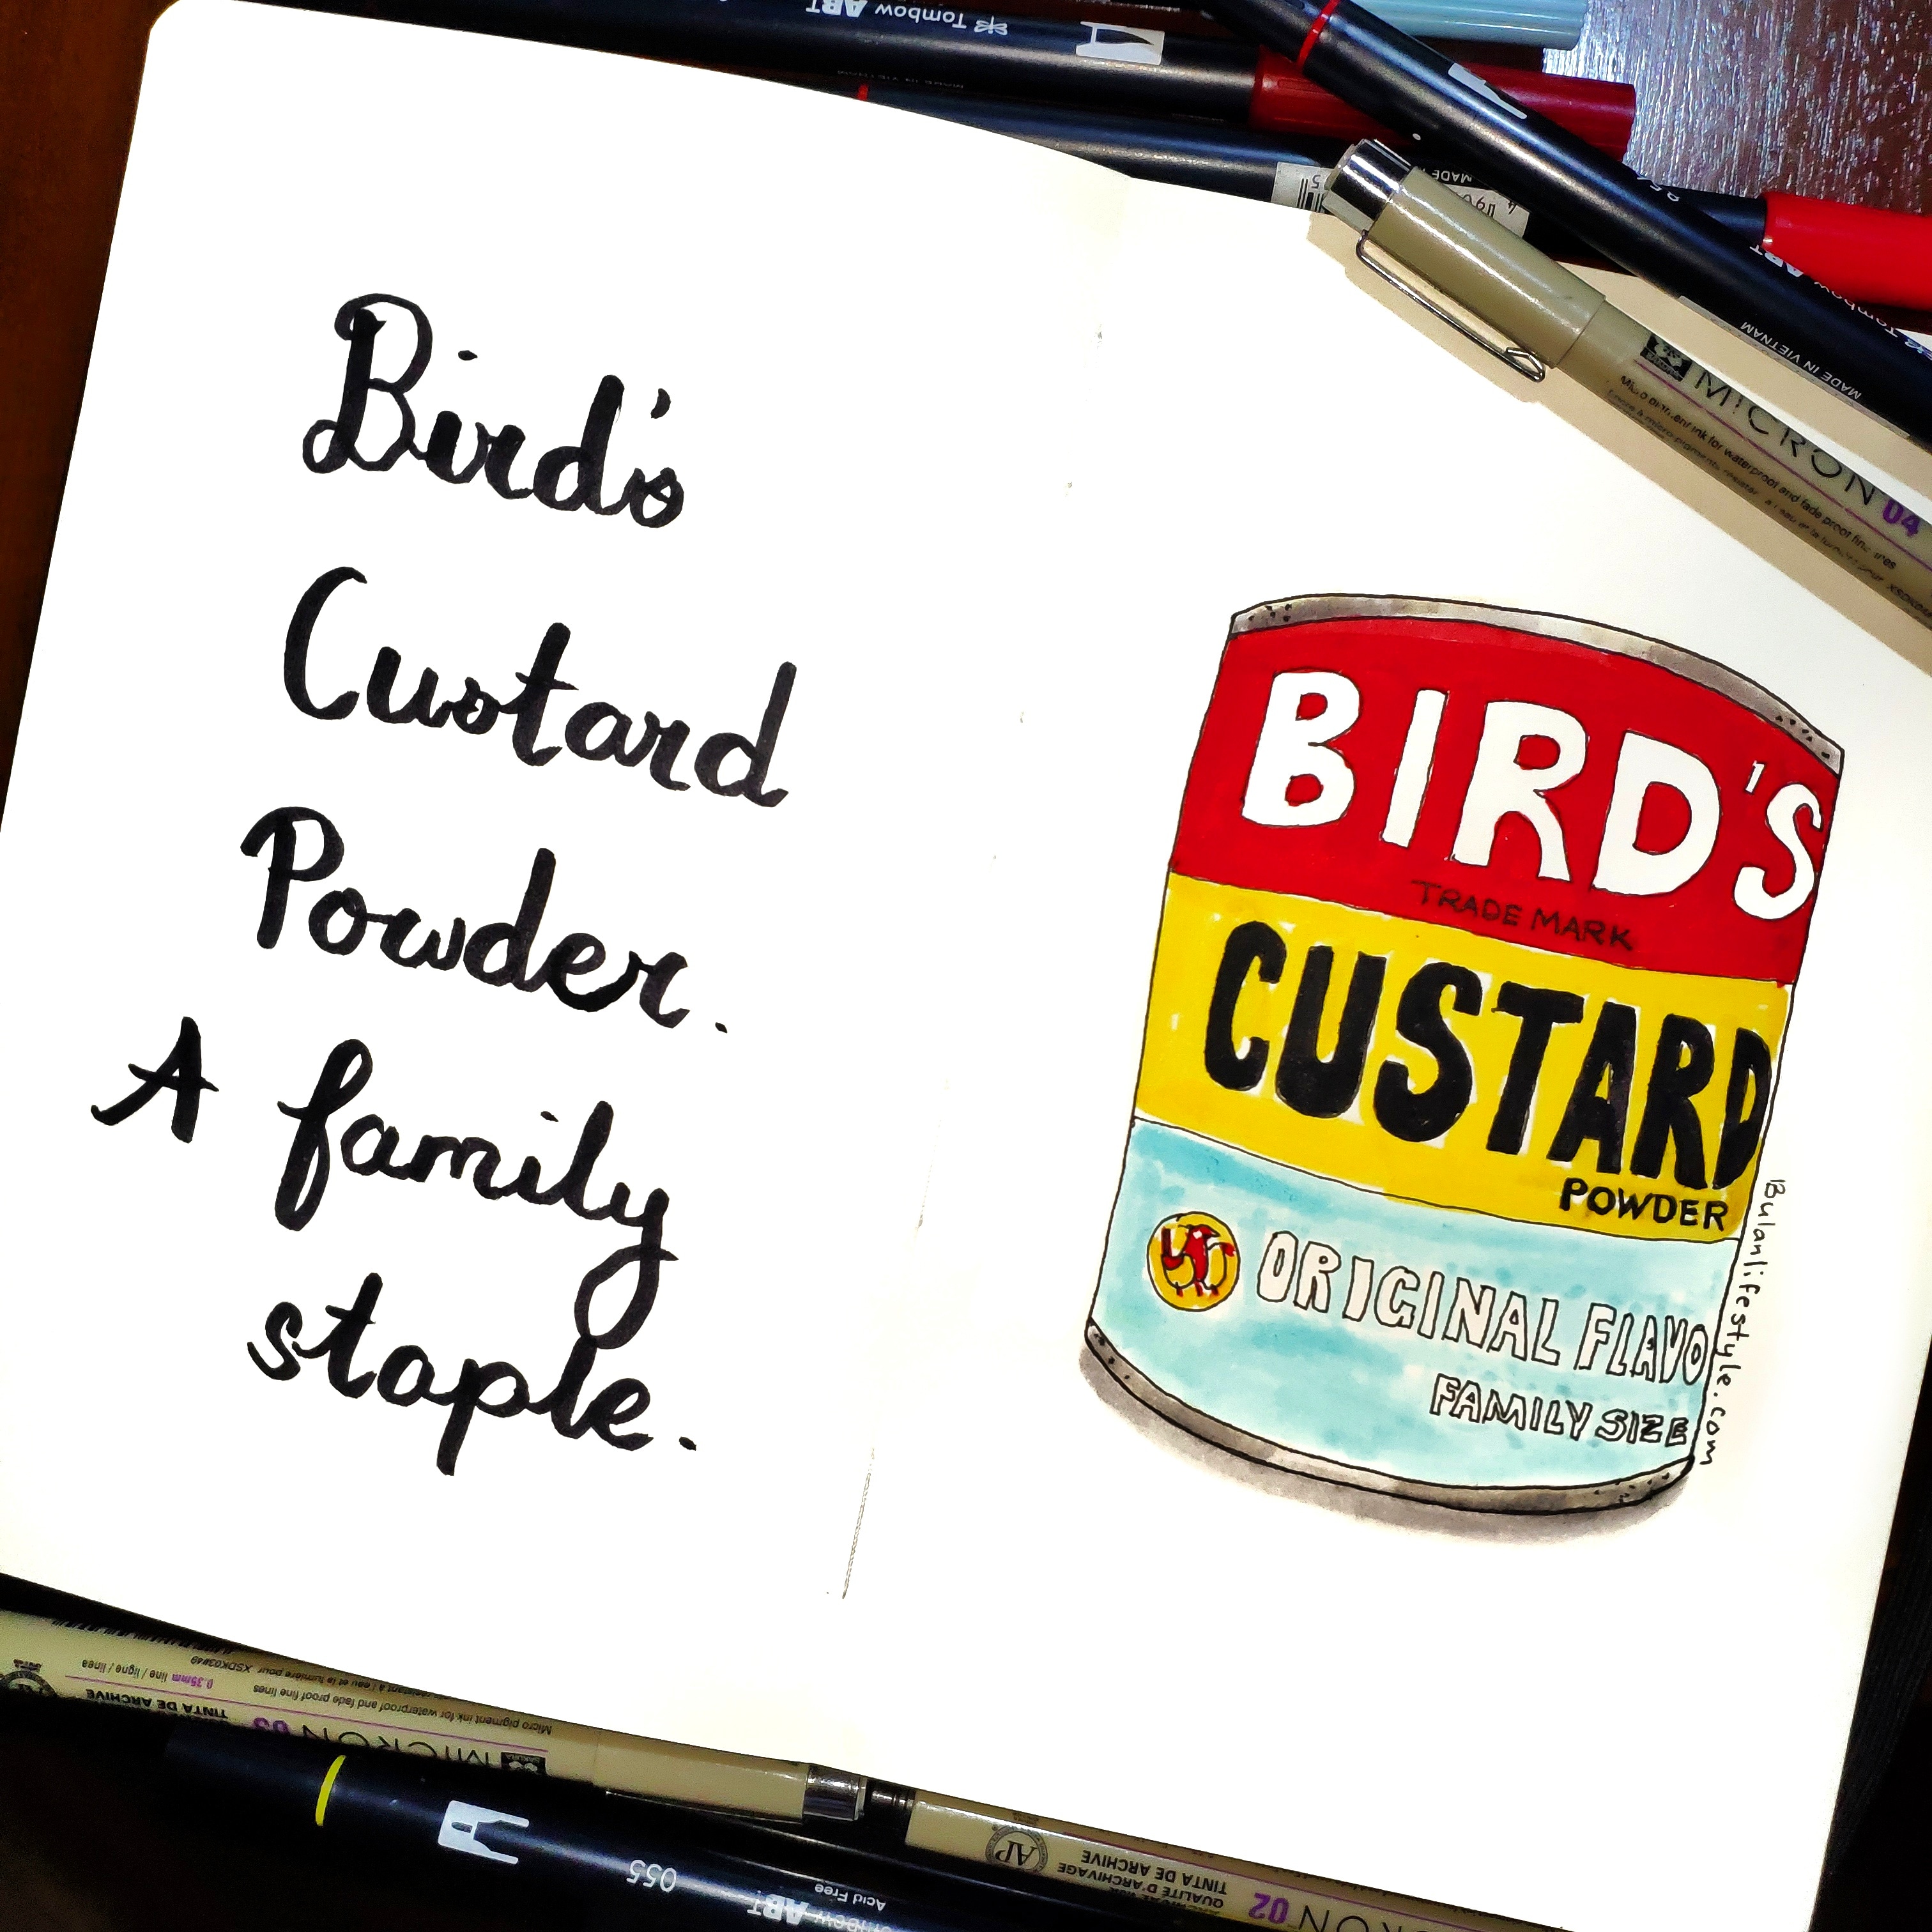 Bird’s custard powder